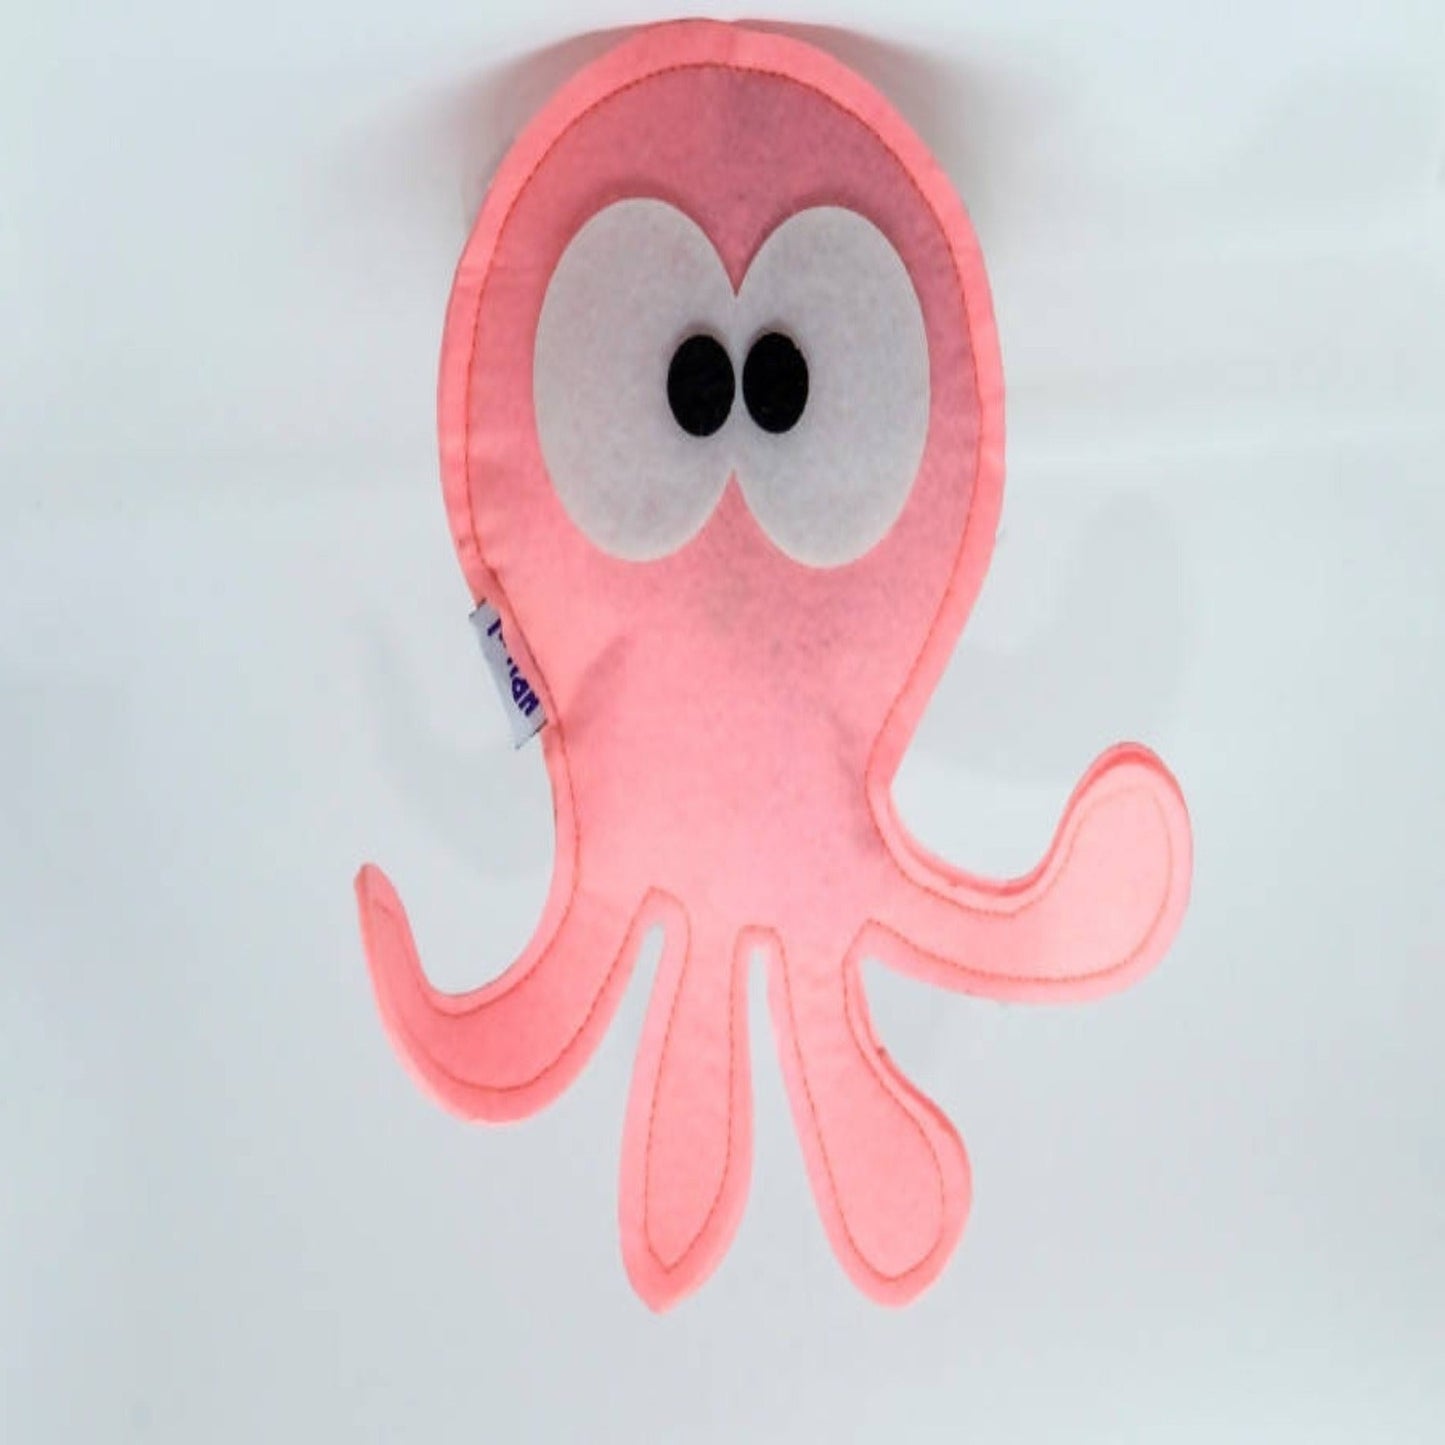 Hriku - Ashtbahu (Octopus) Catnip Toy For Cats